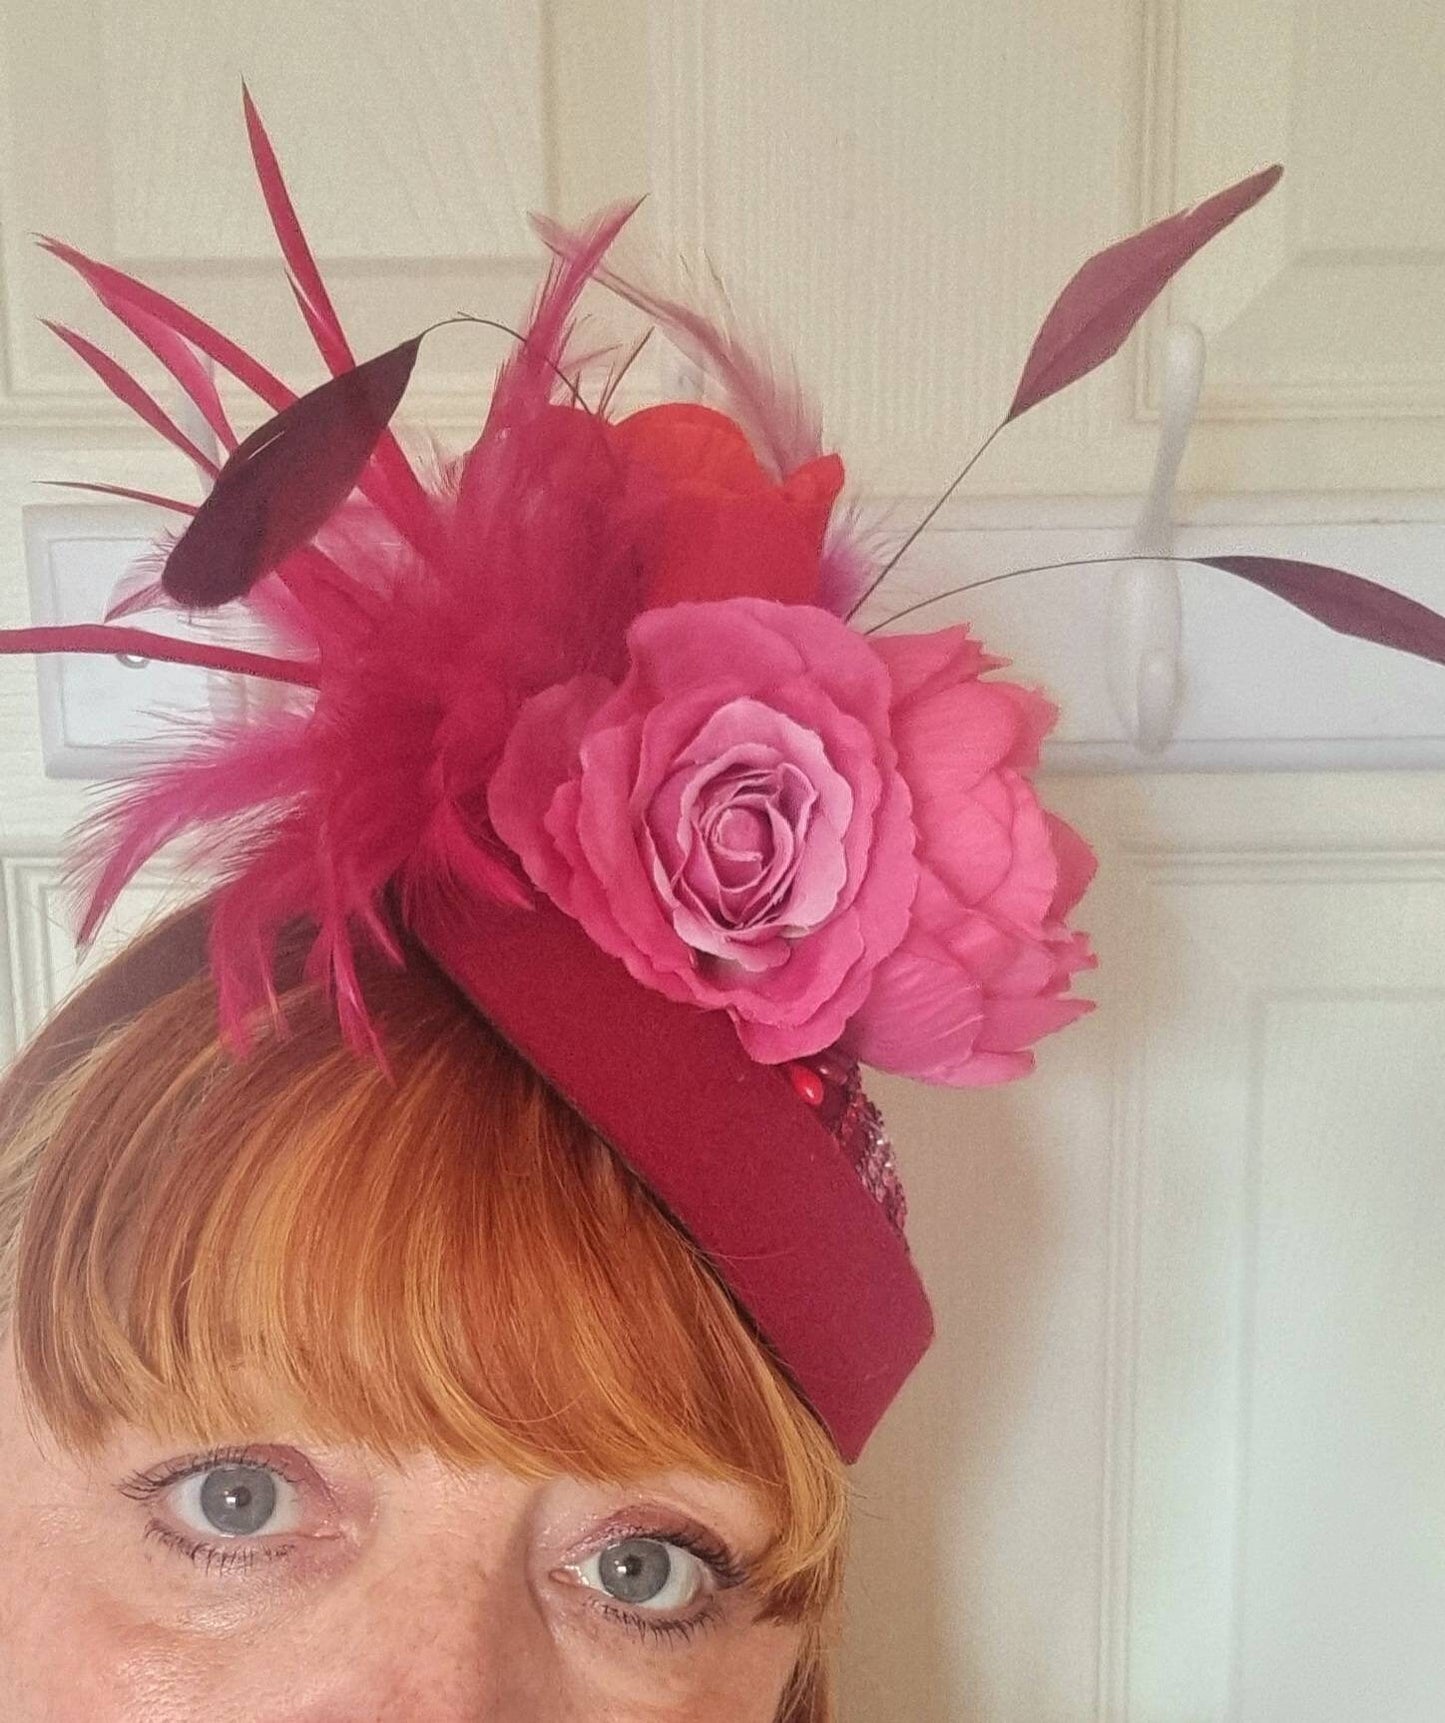 Red hot pink flower pillbox hat Flower fascinator wool percher hatinator vintage look headpiece Races wedding womens